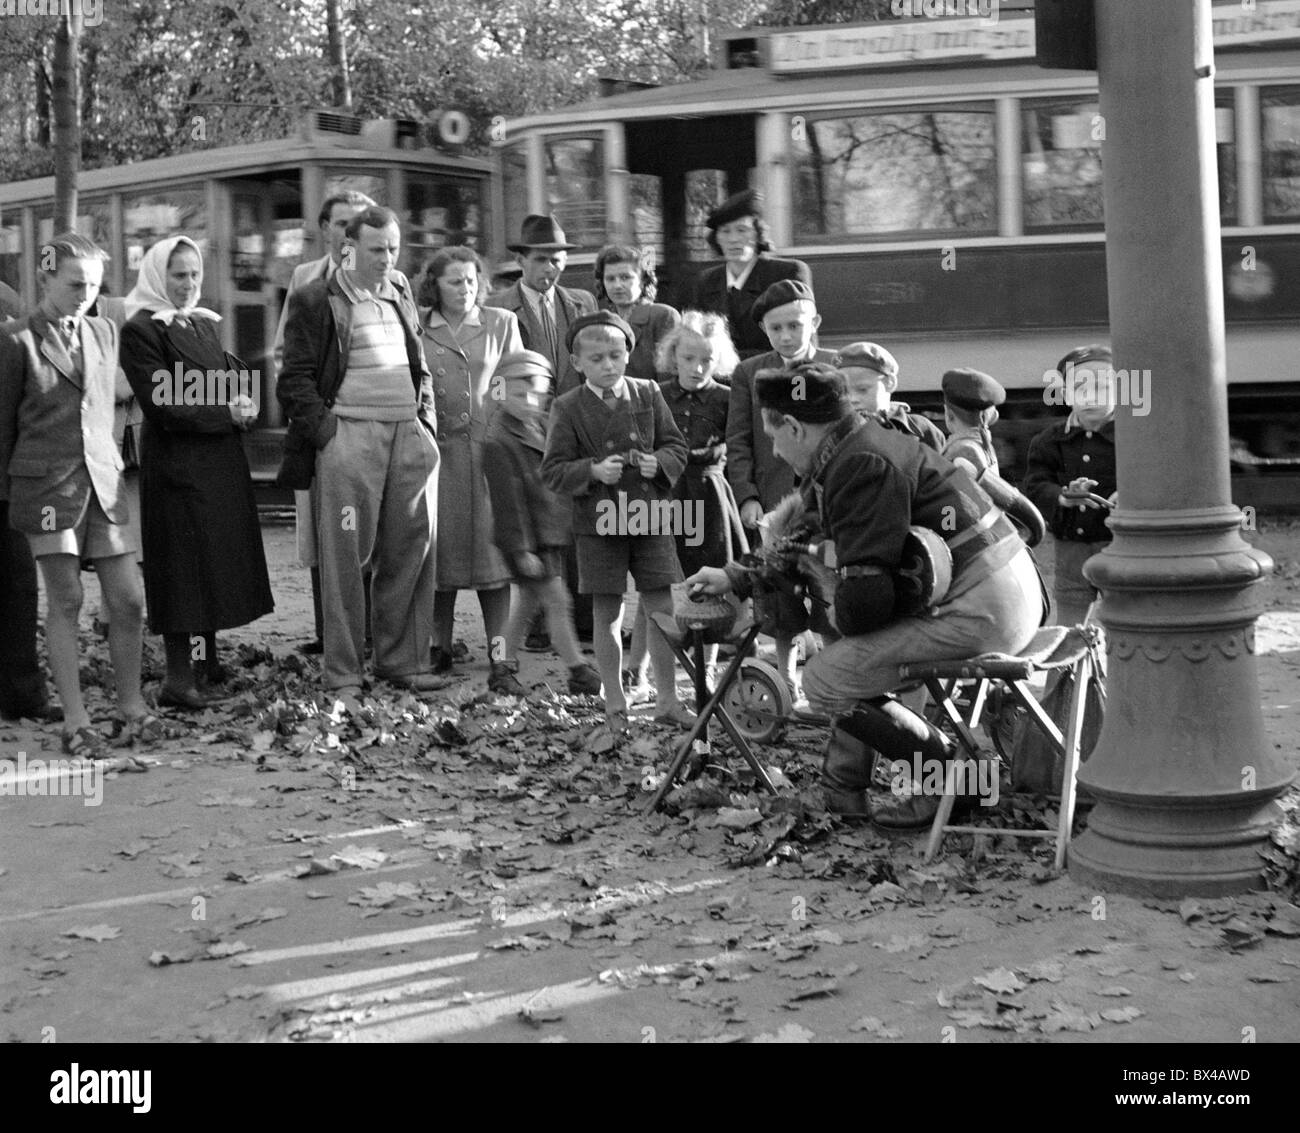 Prague, 1949. Street performer playing bagpipes draws a large crowd. CTK Vintage Photo Stock Photo